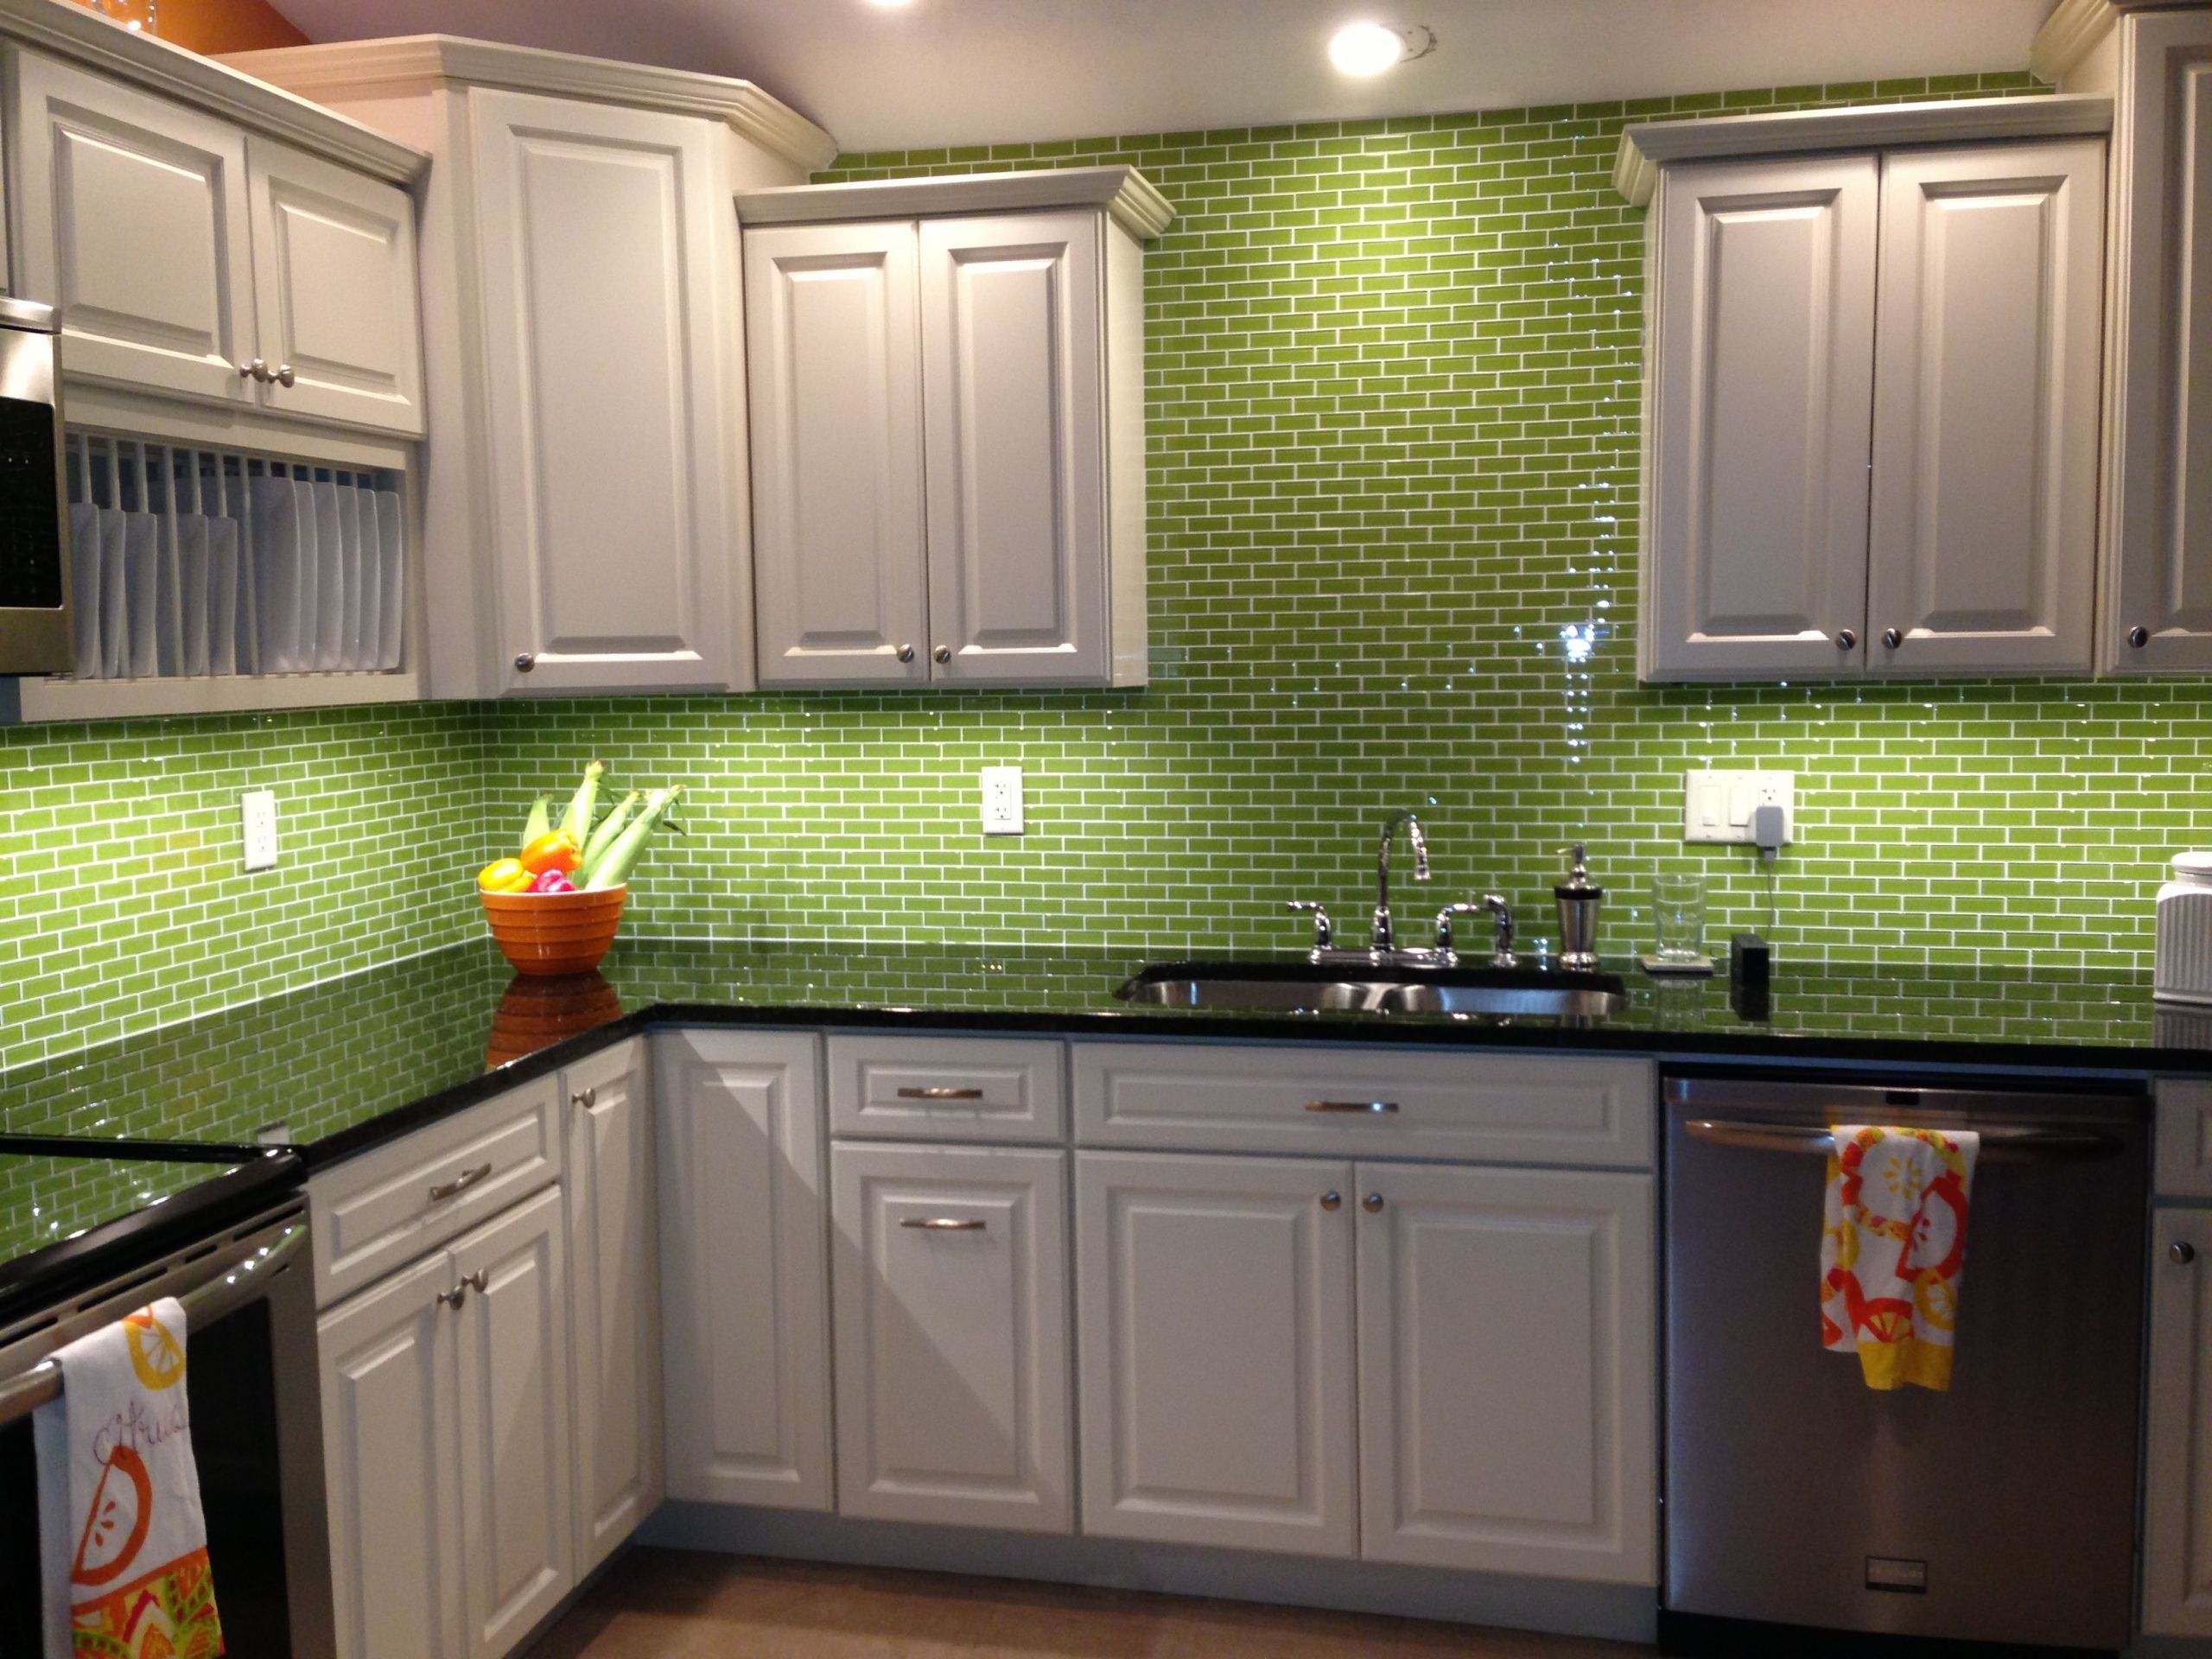 Green Tile Backsplash Kitchen
 Lime green glass subway tile backsplash kitchen With